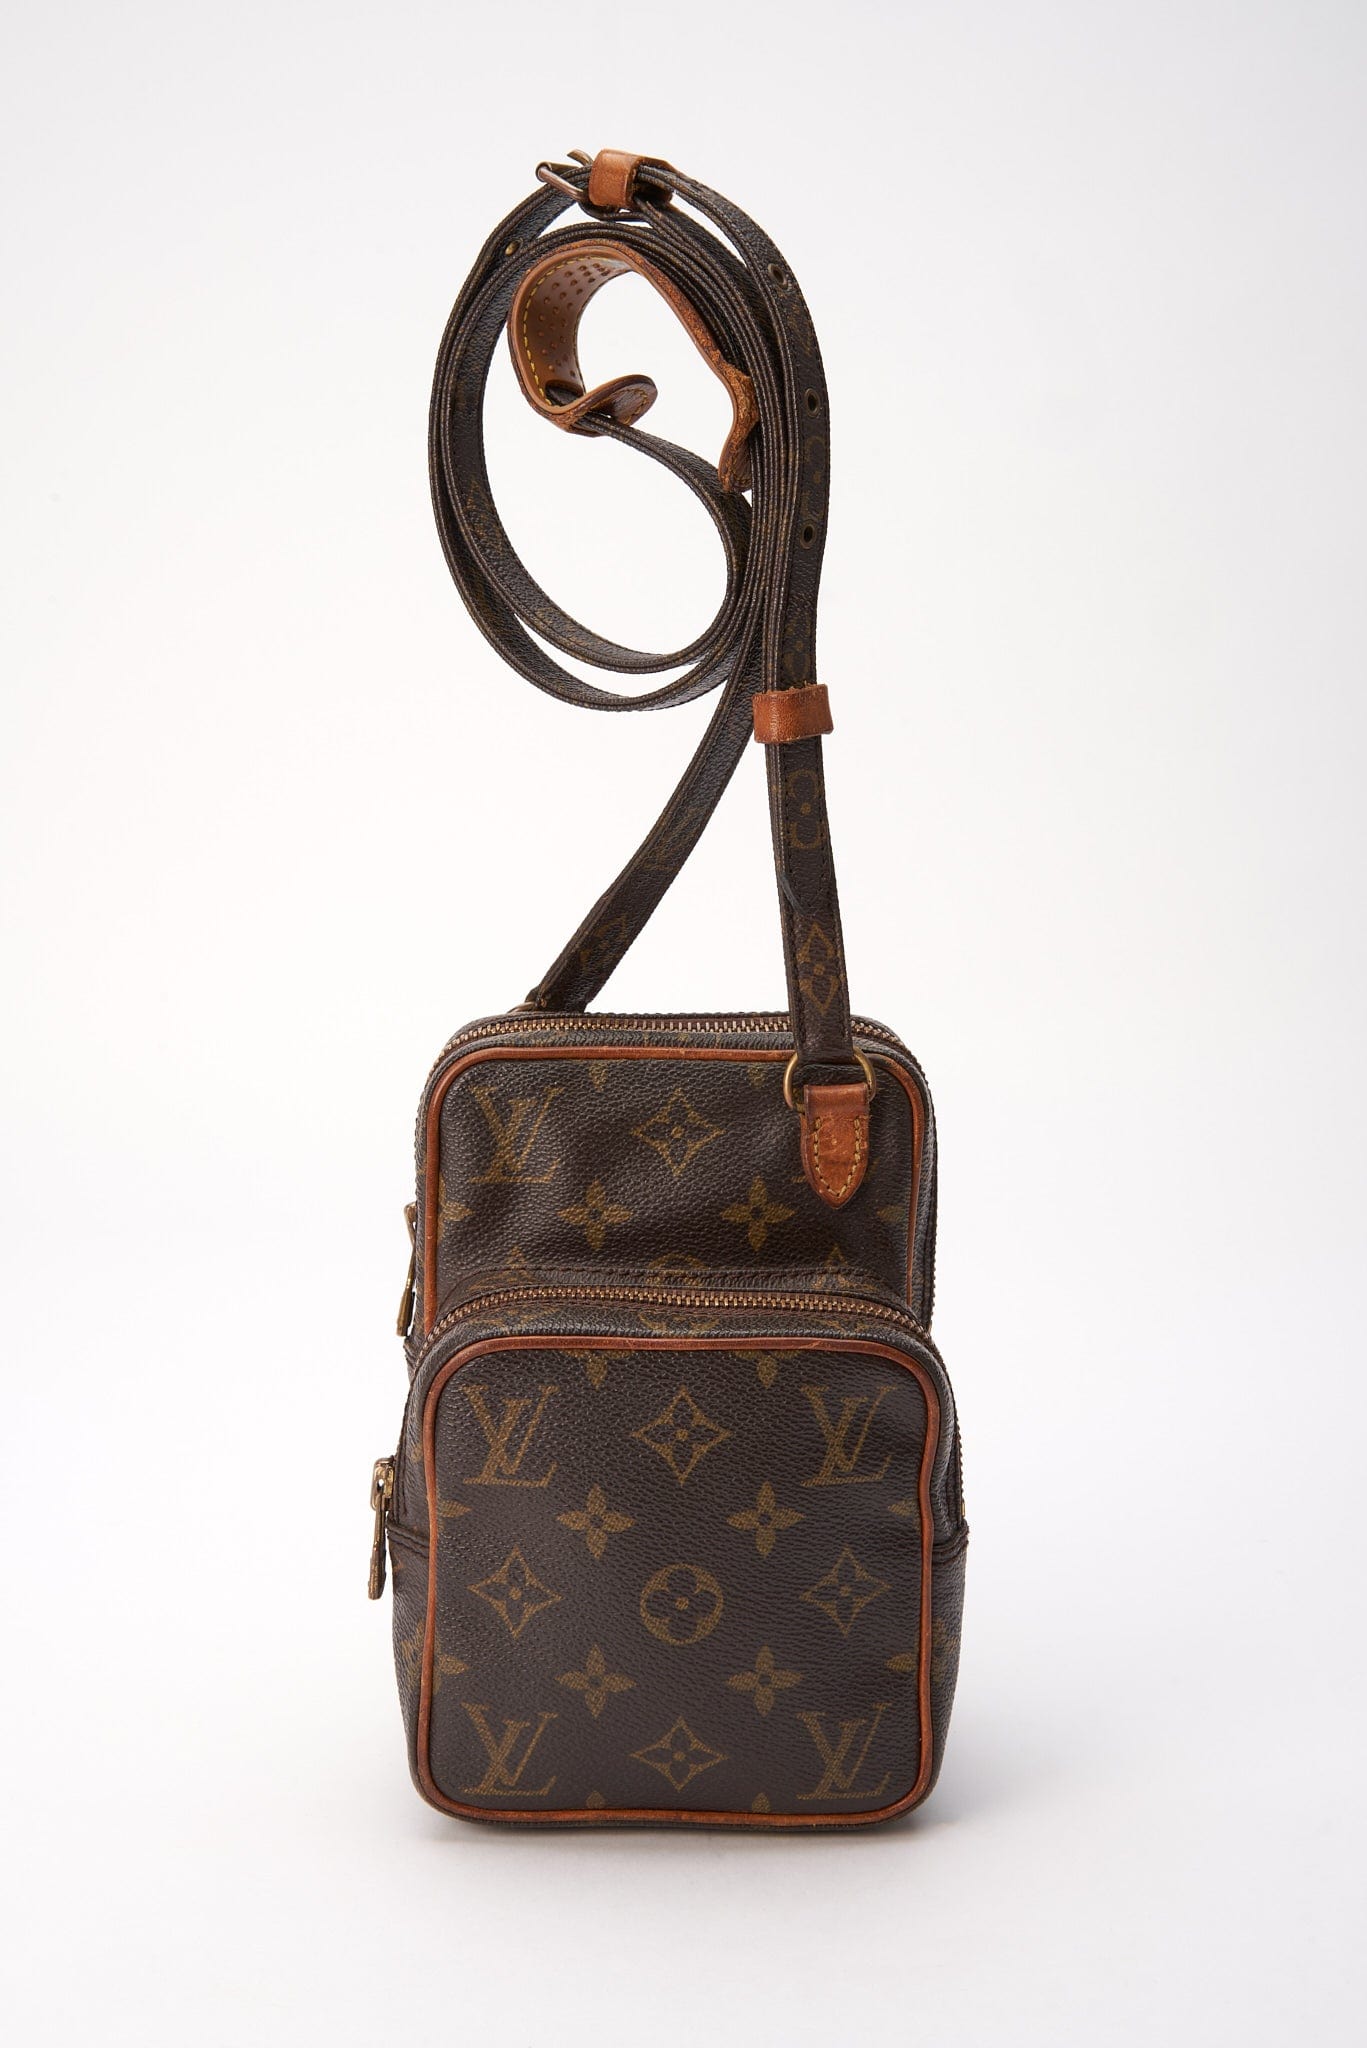 Louis Vuitton PM Amazon Crossbody Bag in Monogram Canvas